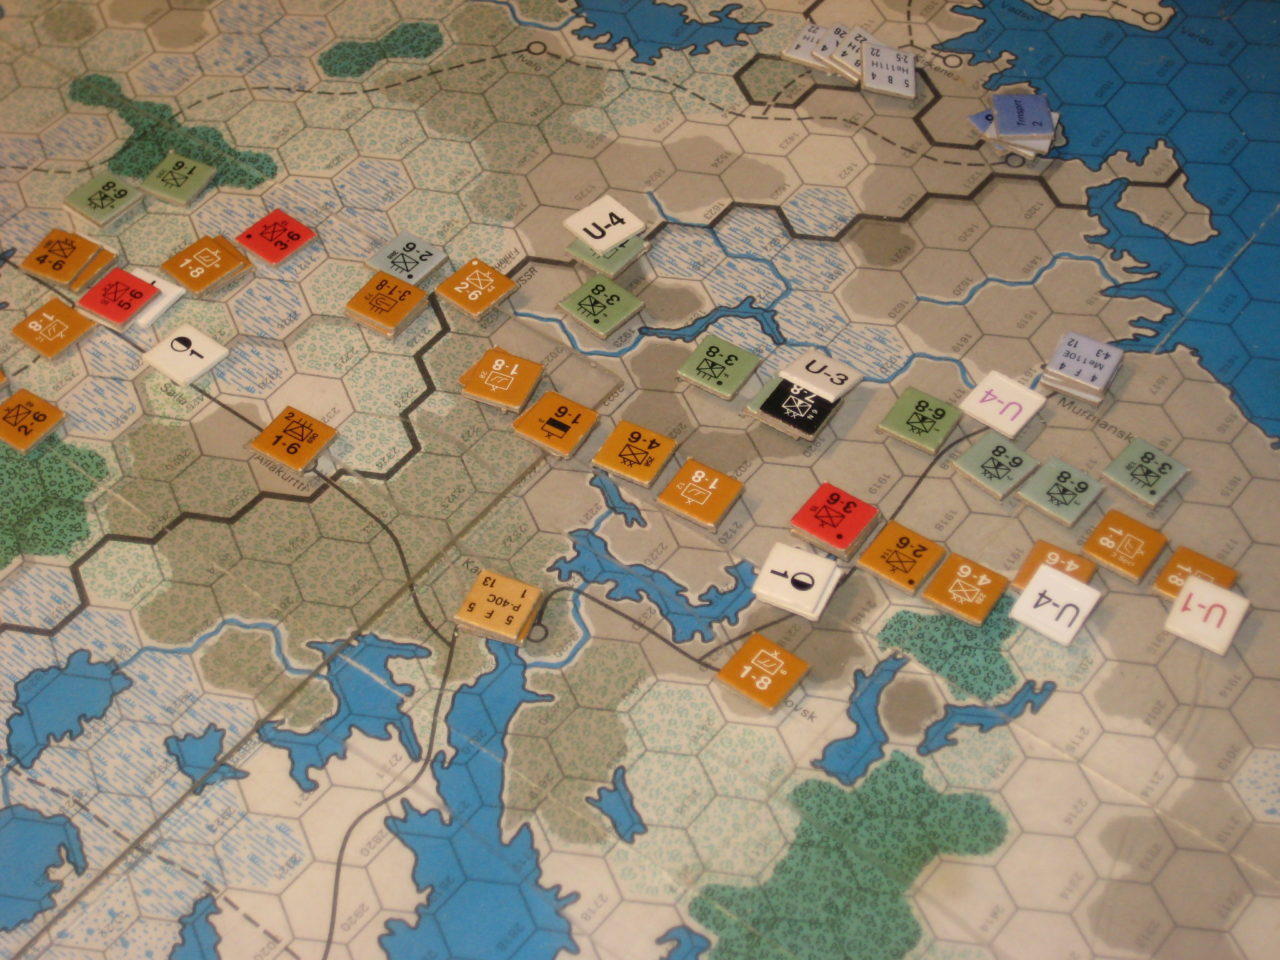 The Axis retreat towards Murmansk